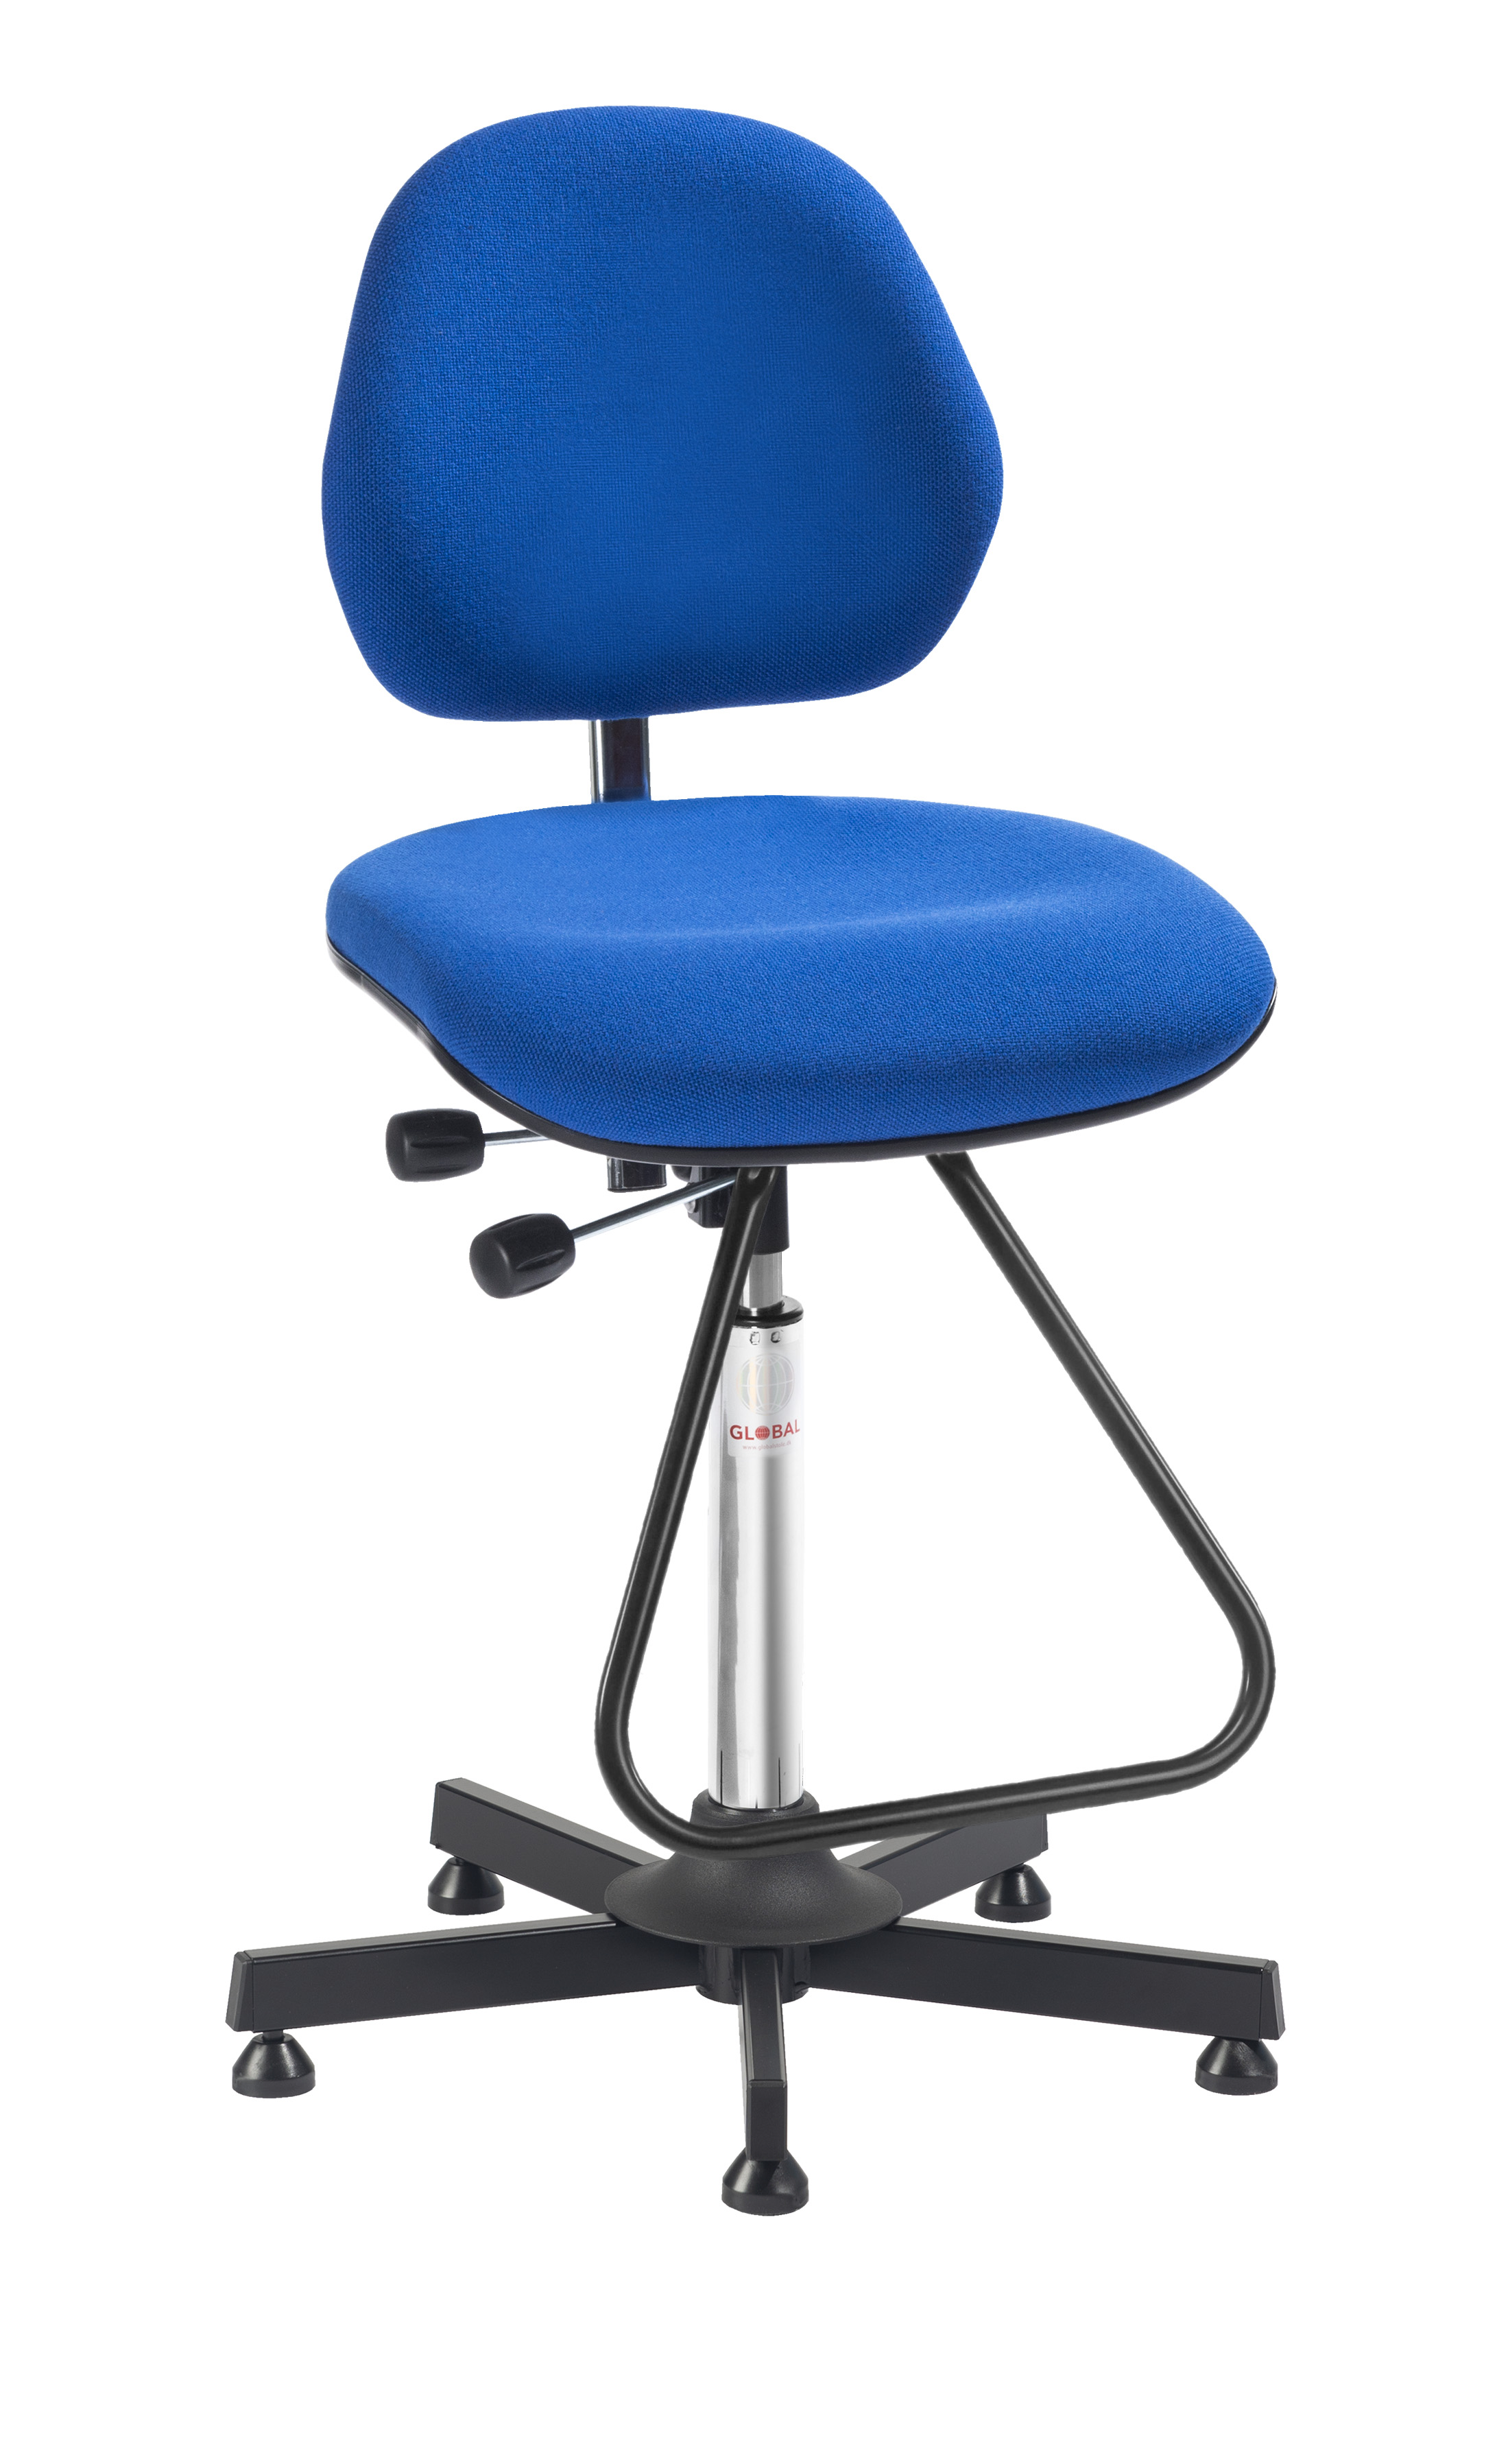 Bott Industrial Chair Adjustable Height 630-890mm - 88601011